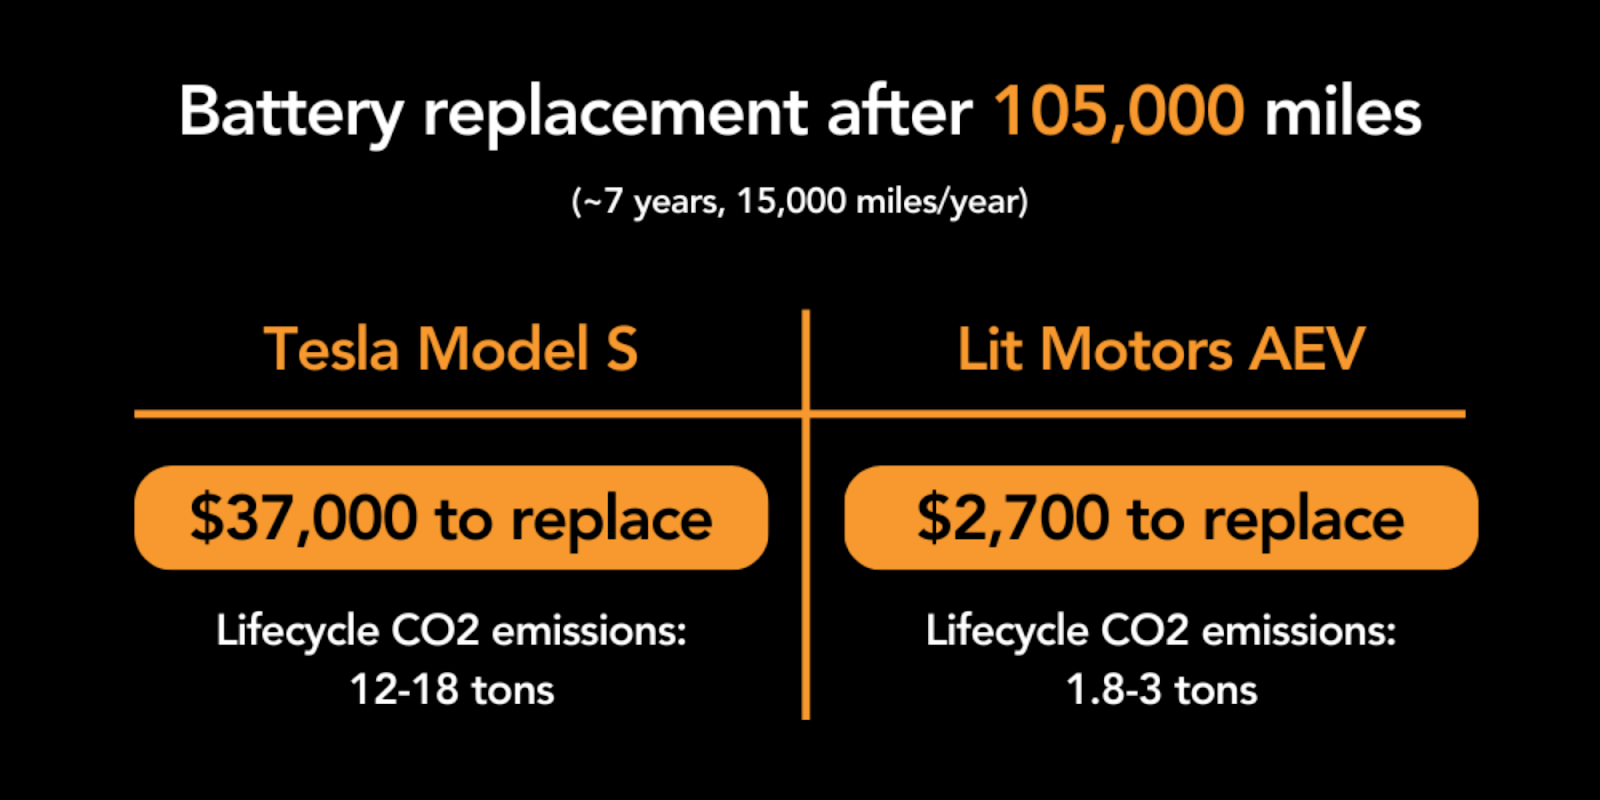 Battery replacement costs after 105k miles: $37k for Tesla Model S, $2700 for Lit Motors AEV